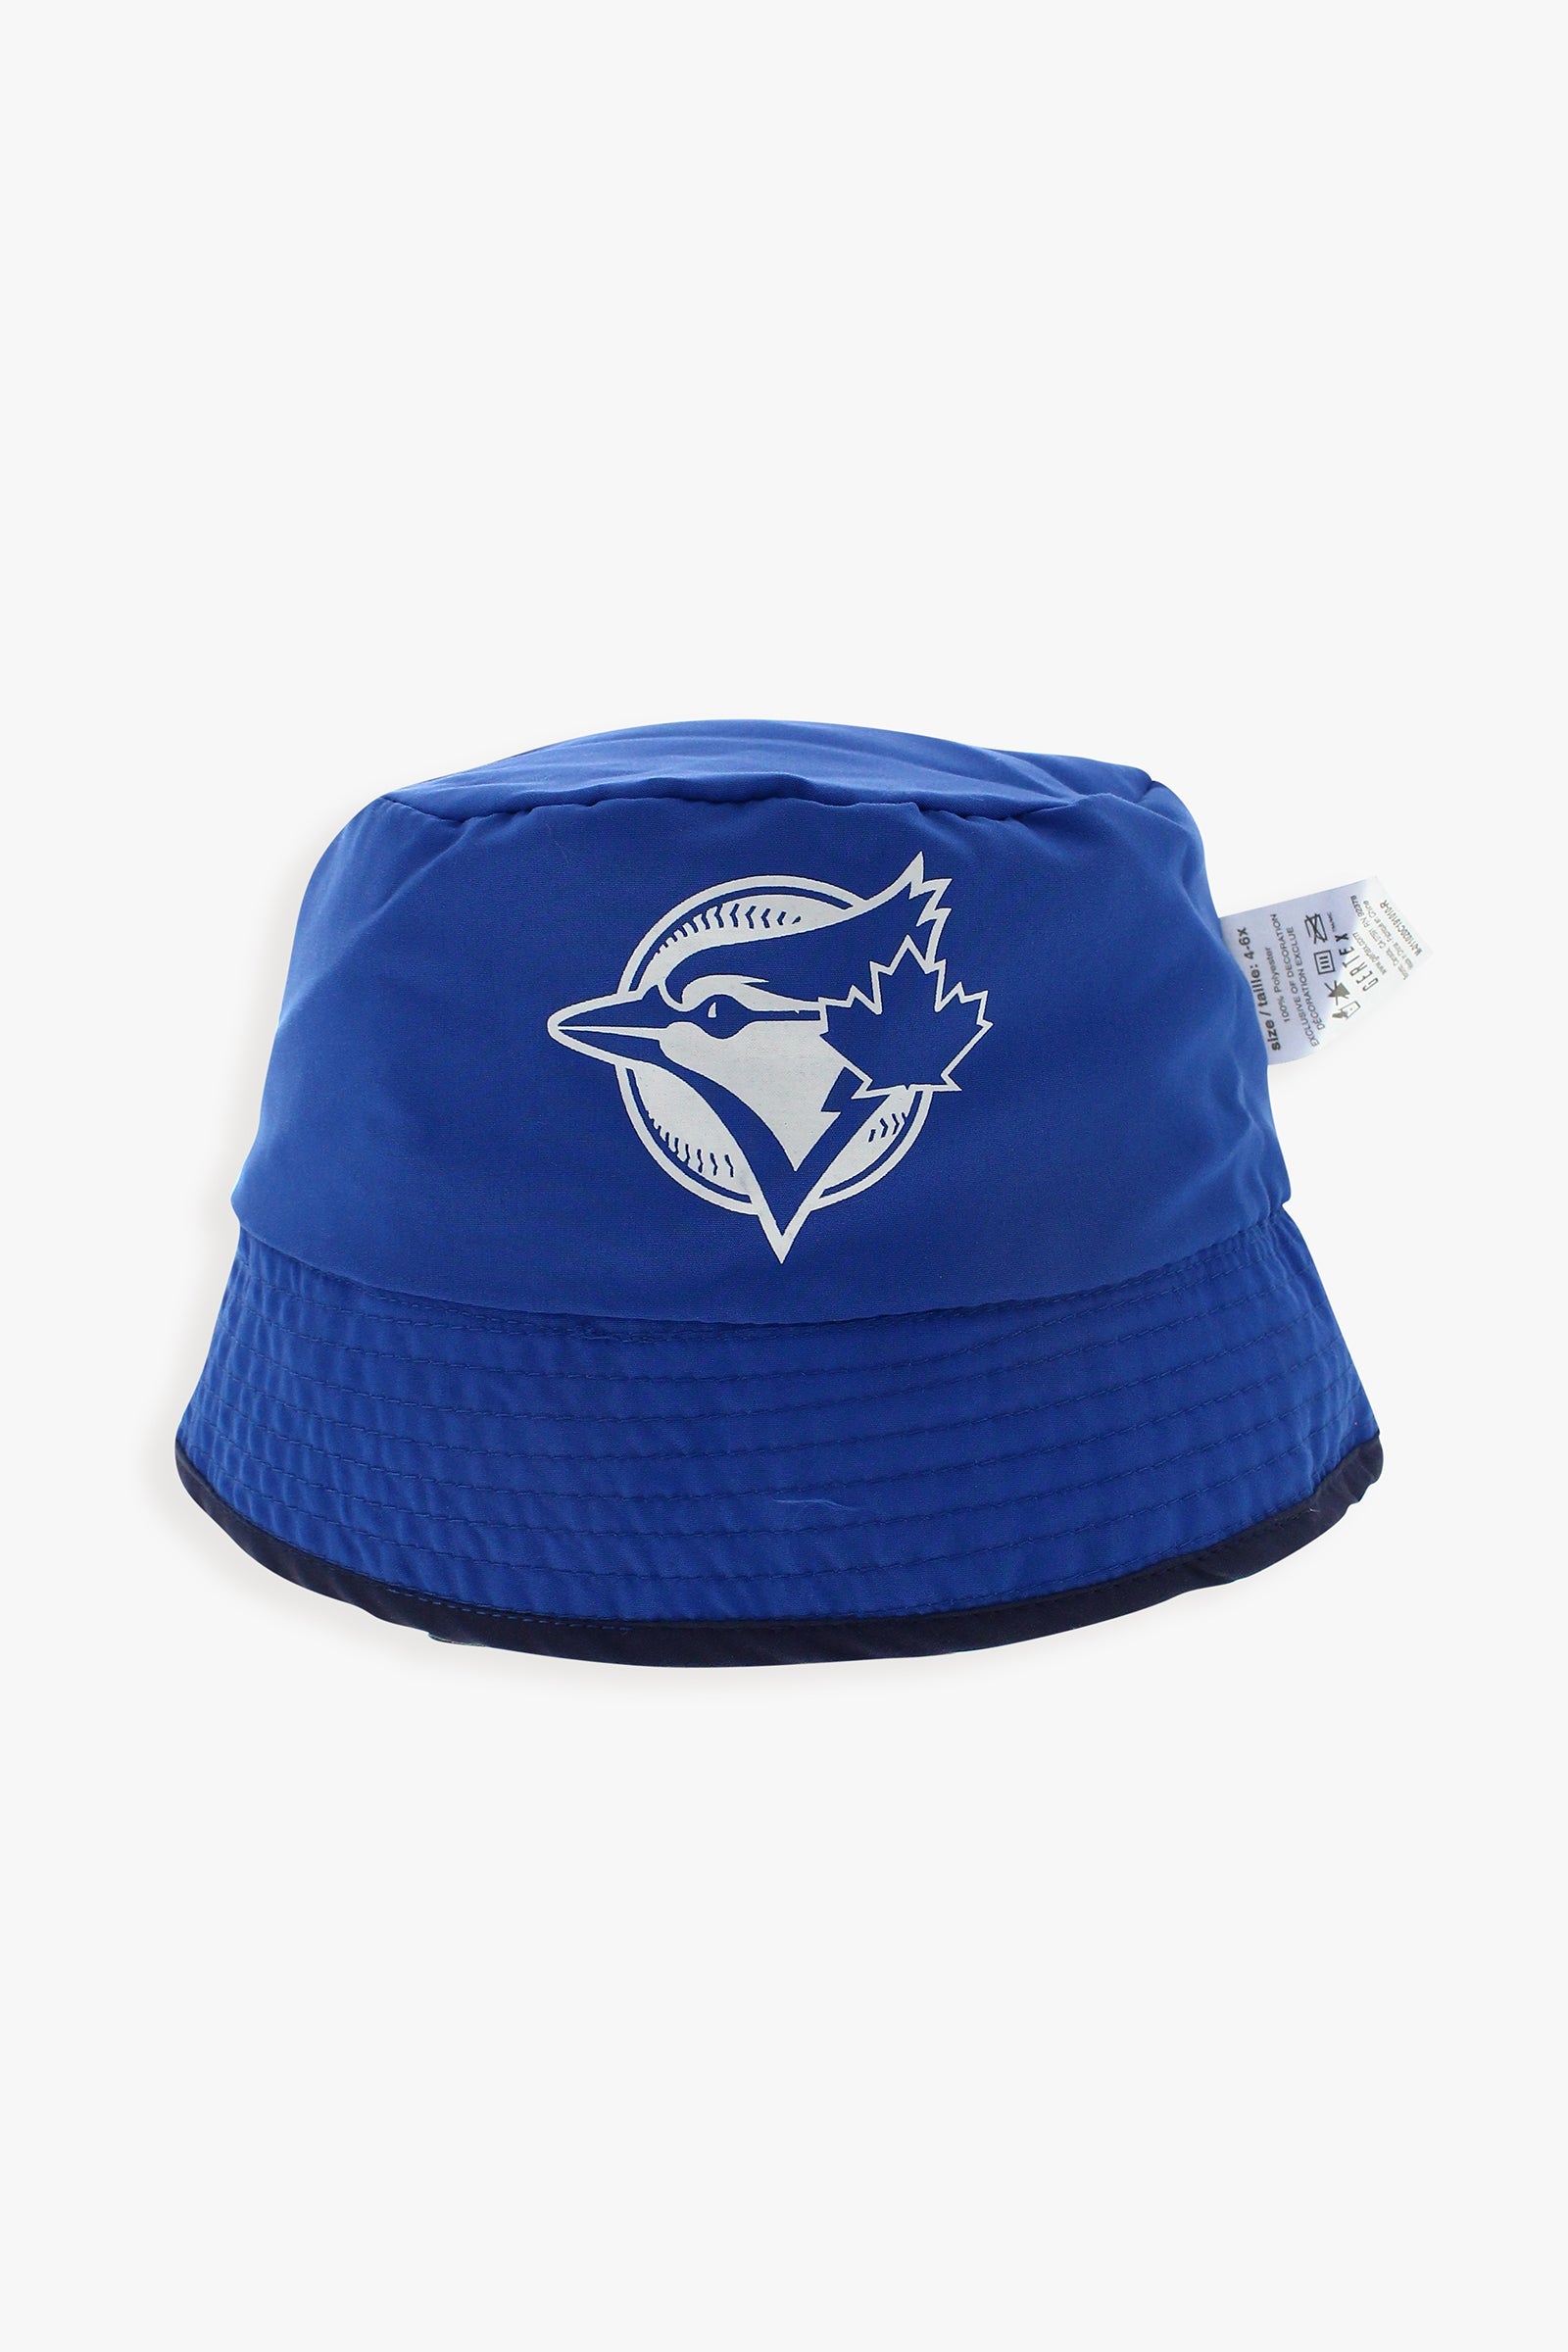 MLB Toronto Blue Jays Kids Reversible/Packable Bucket Hat Blue